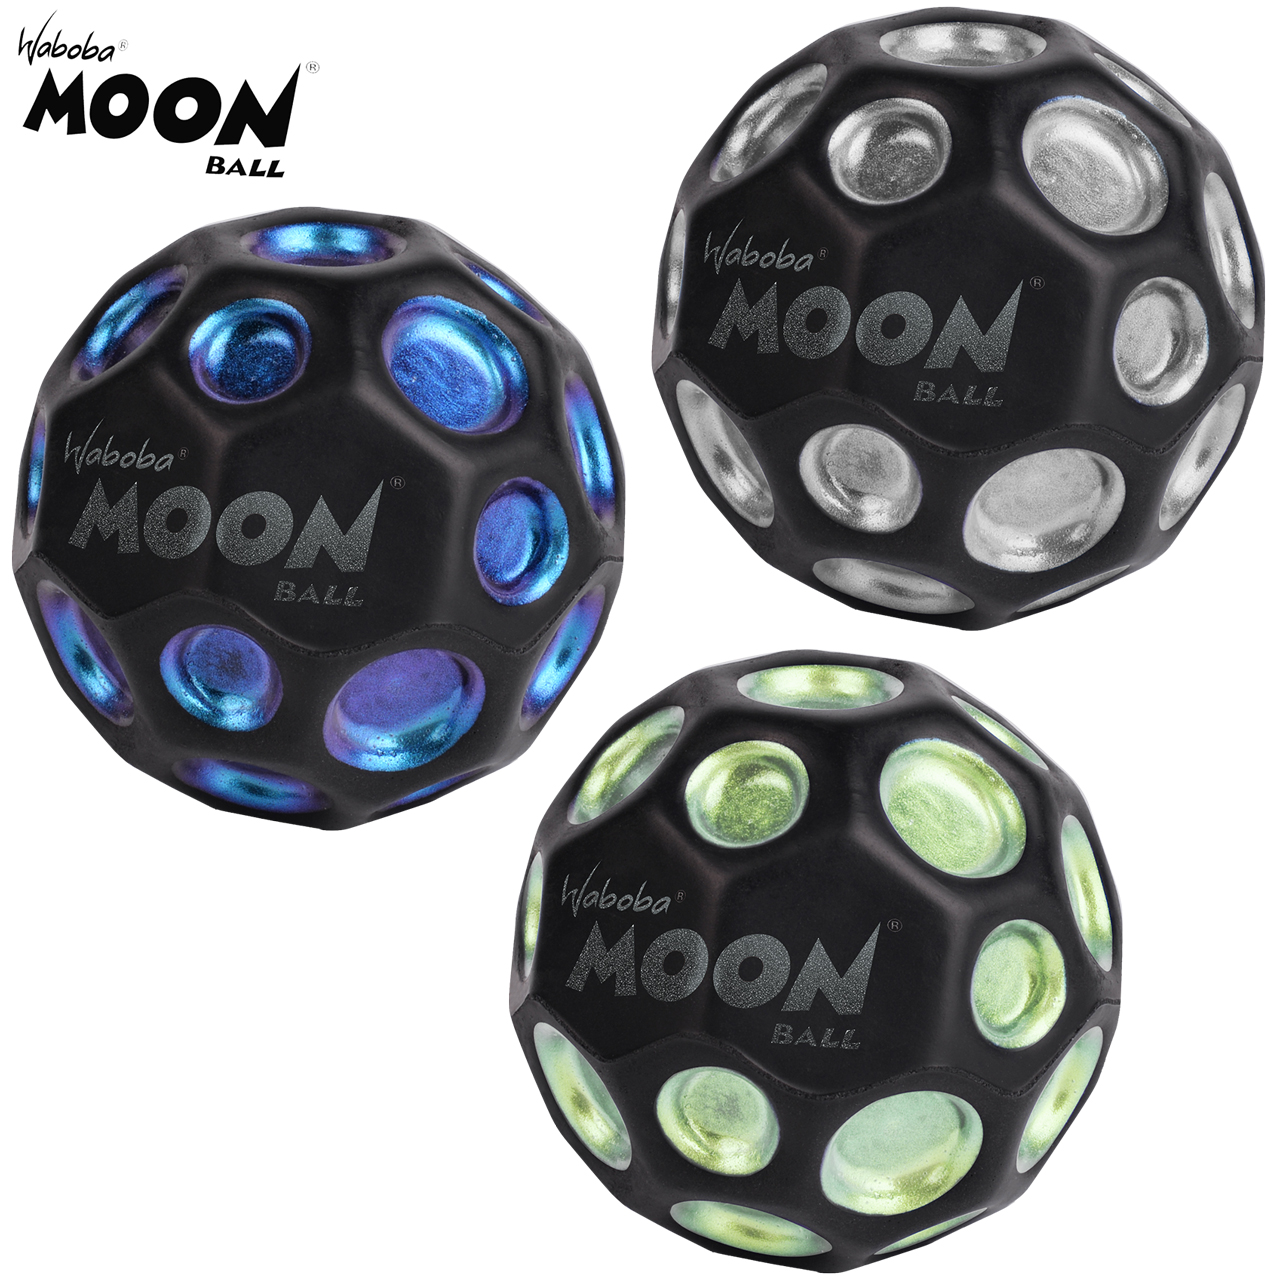 Waboba-Ball-Moon-original-DARK-SIDE-OF-THE-MOON-0840001932296-moonball-online-kaufen-lafueliki